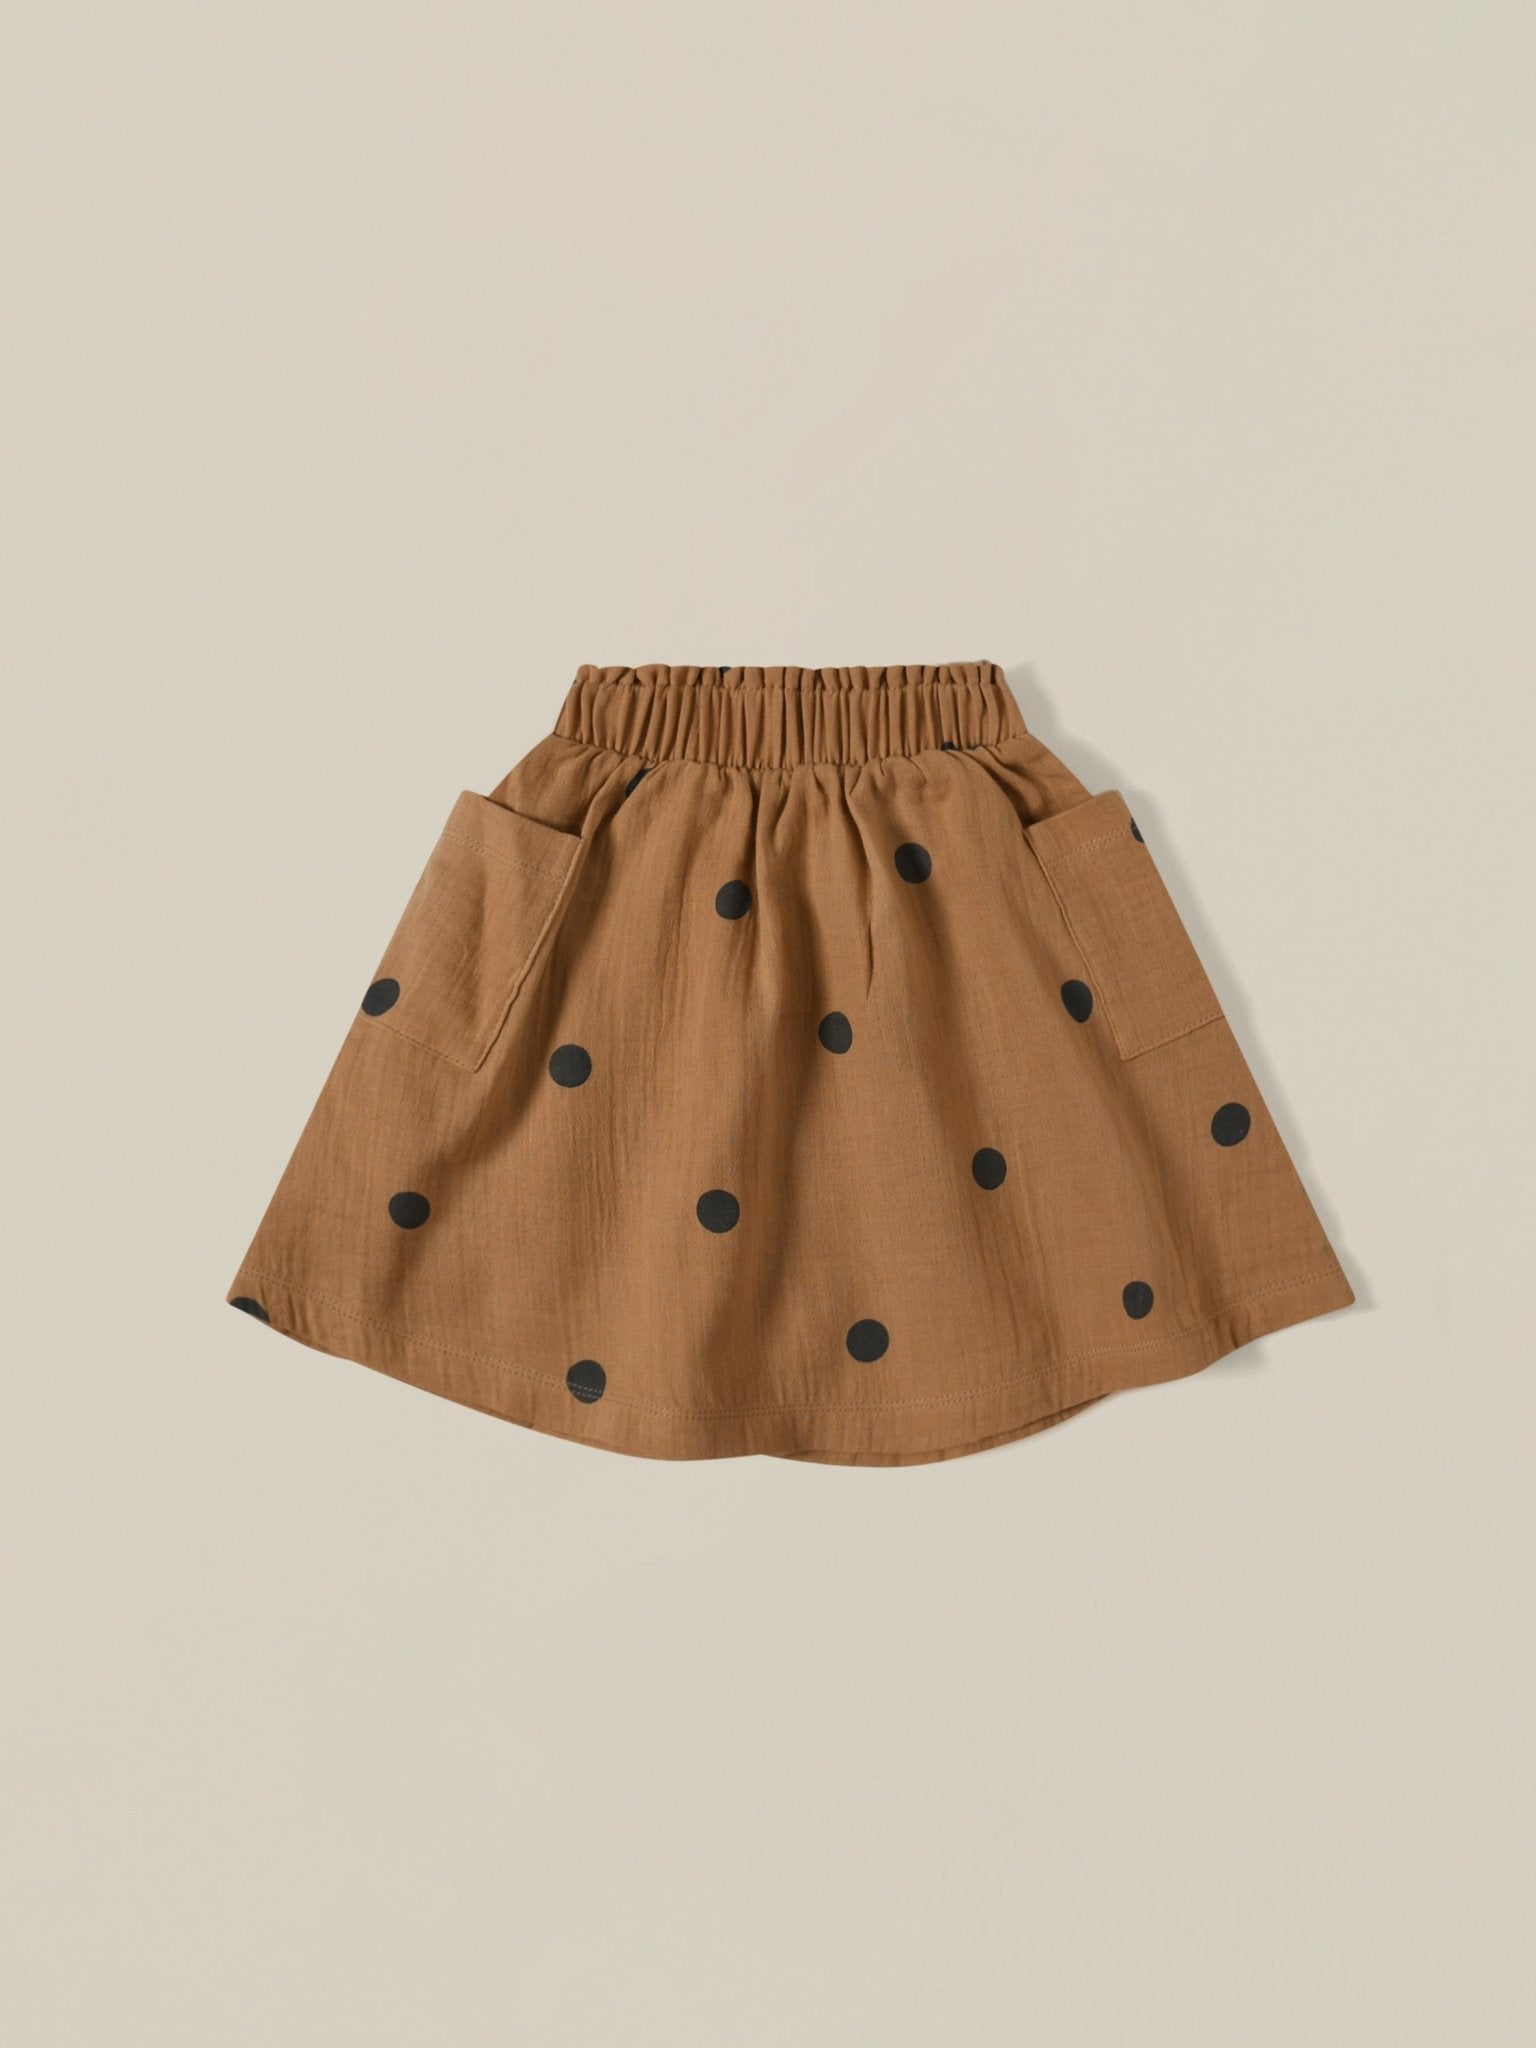 Tutti Skirt by Organic Zoo - OAT & OCHRE | Slow Fashion, Organic, Ethically-Made